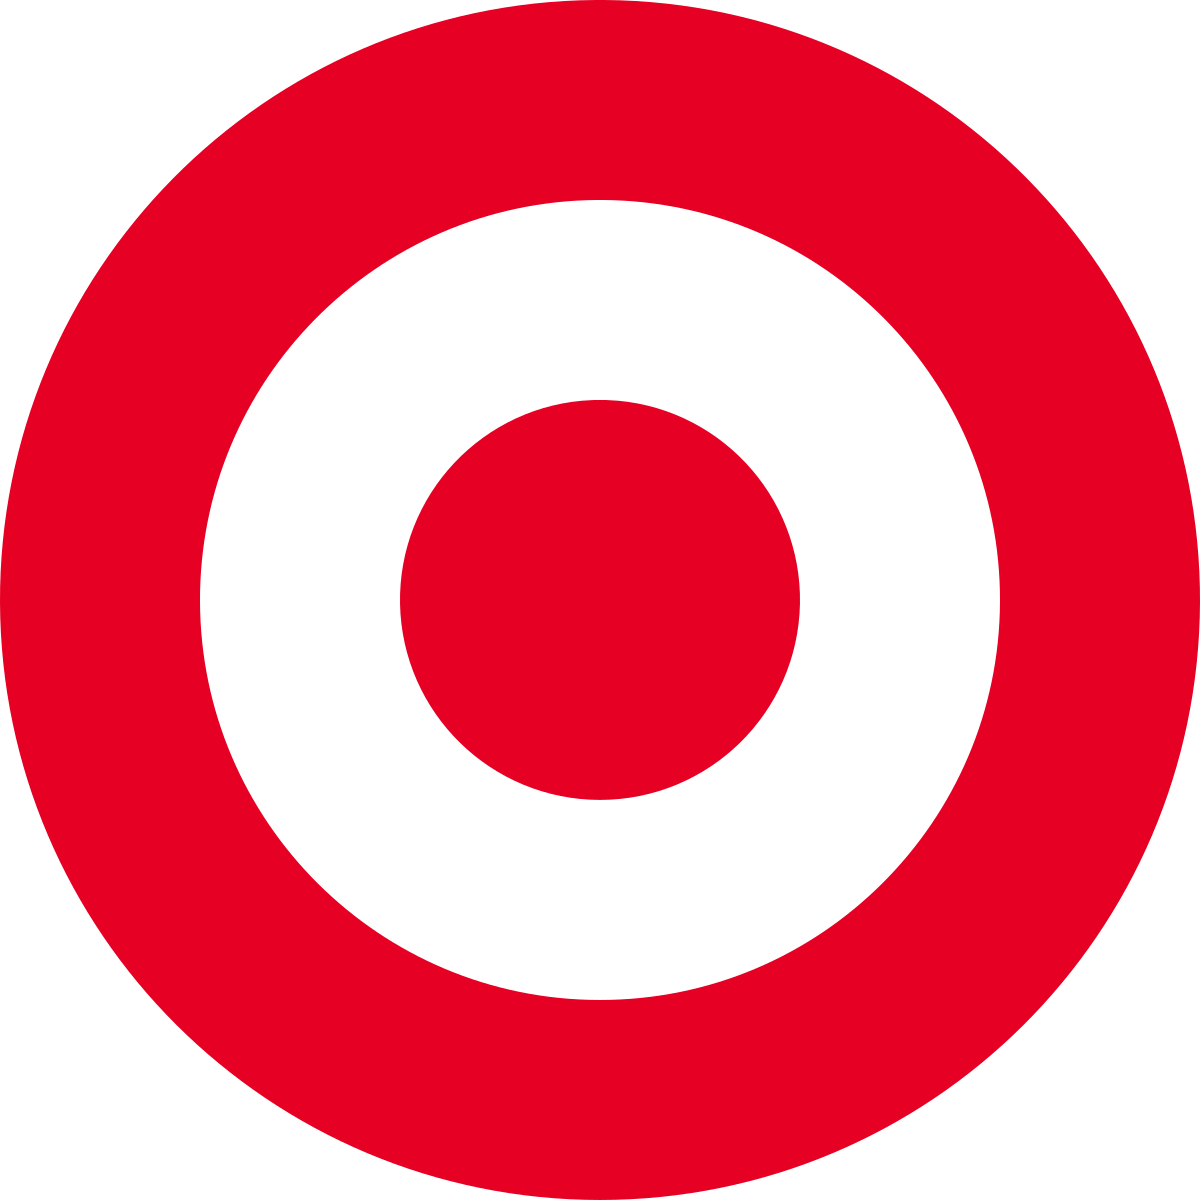 American Retailer Red S Logo - Target Corporation